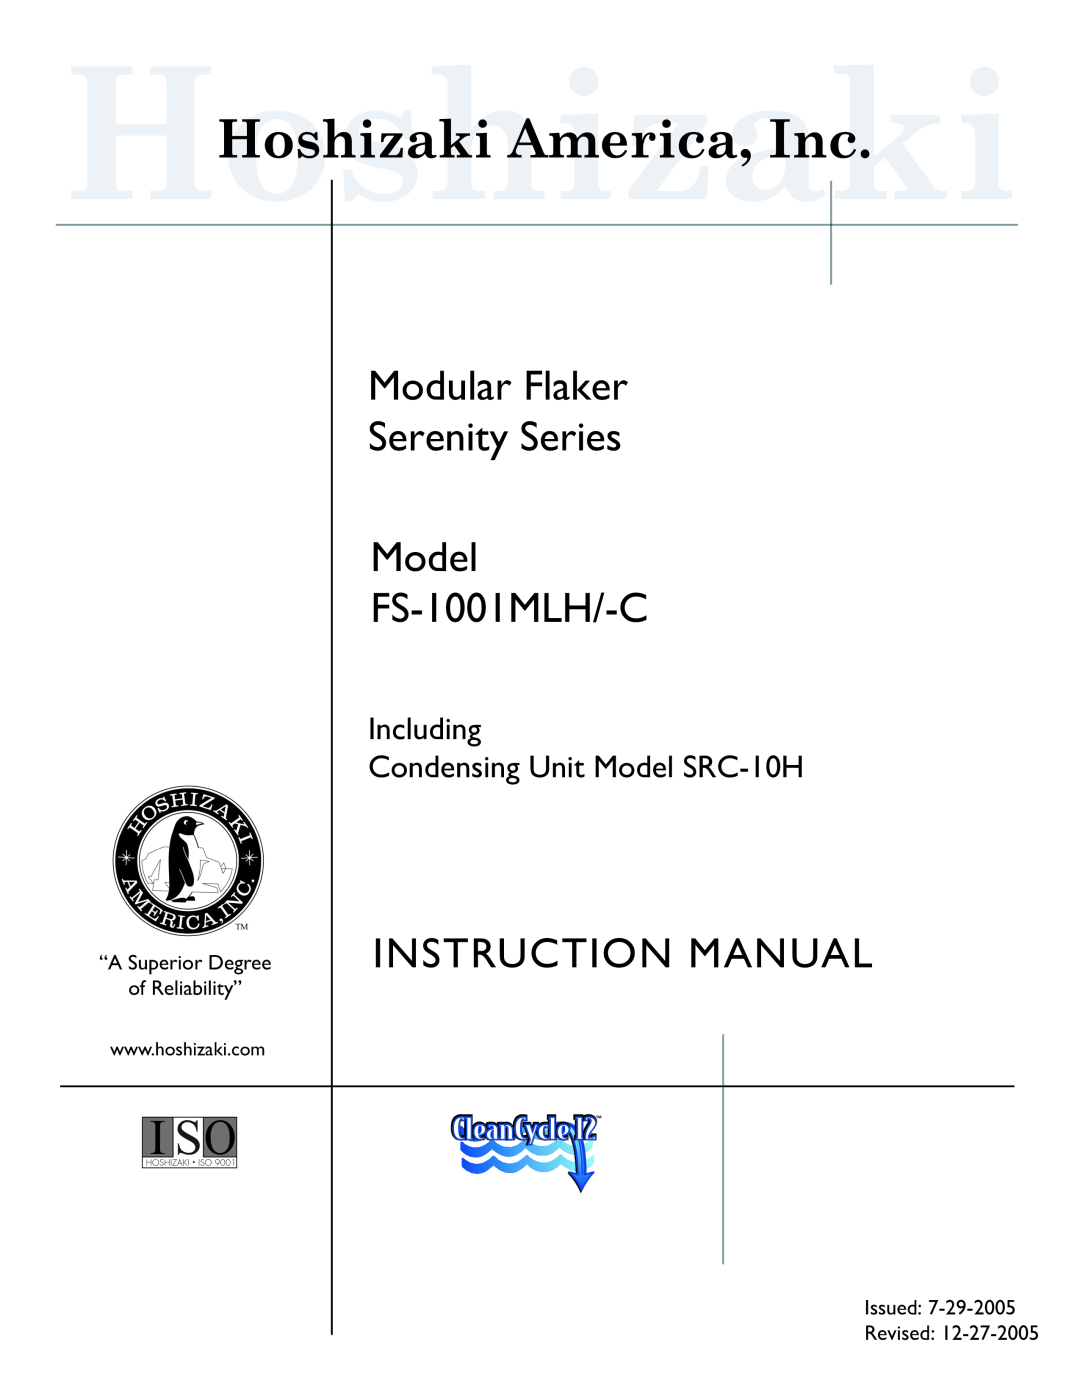 Hoshizaki SRC-10H instruction manual Modular Flaker Serenity Series Model, FS-1001MLH/-C, Issued Revised 